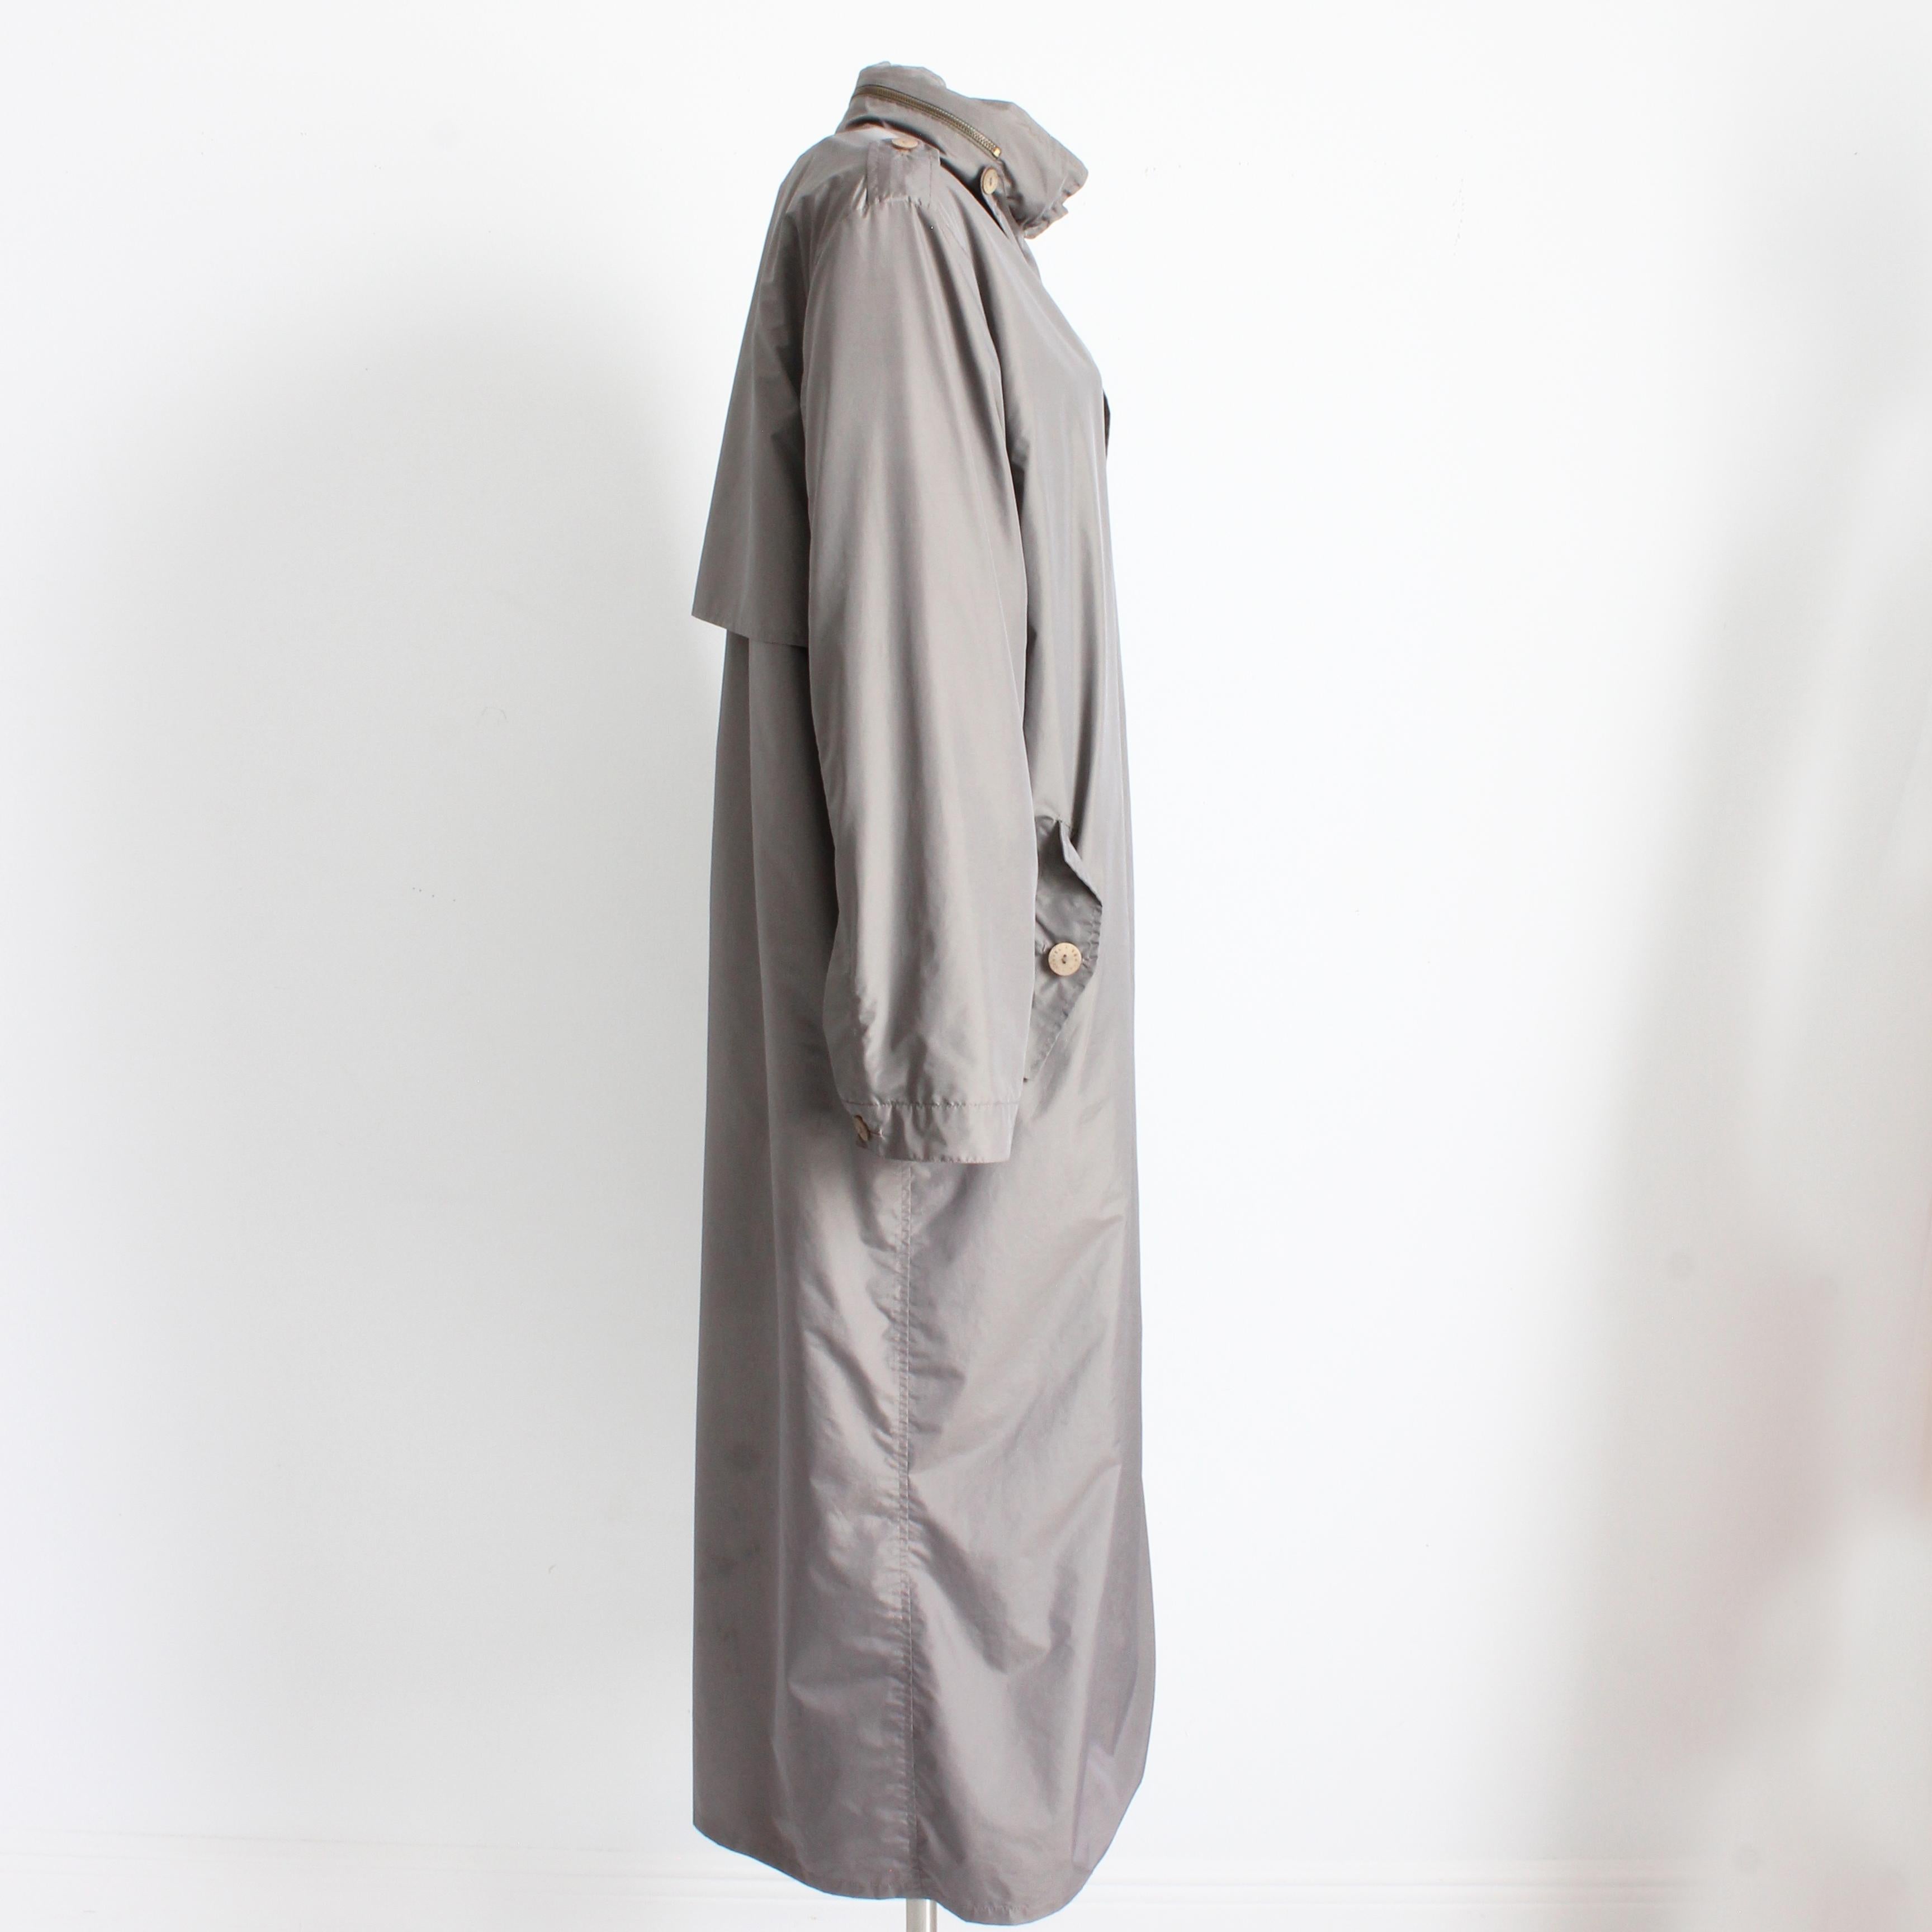 Sonia Rykiel Paris Rain Coat Trench Coat with Hood Lined Vintage 1990s  For Sale 1